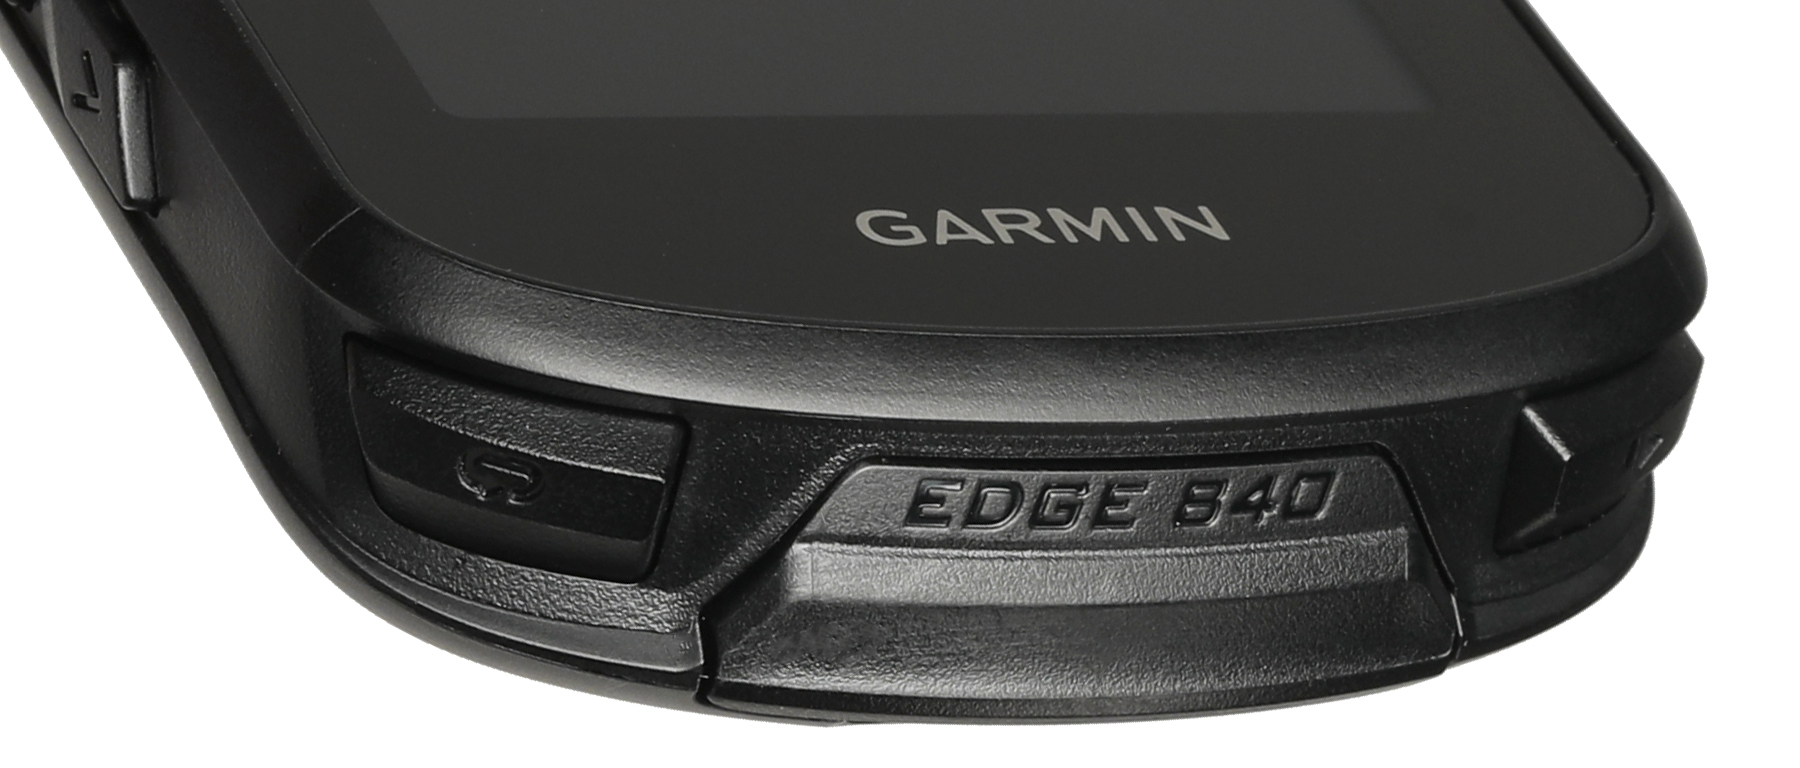 Garmin Edge 840 GPS Computer Bundle